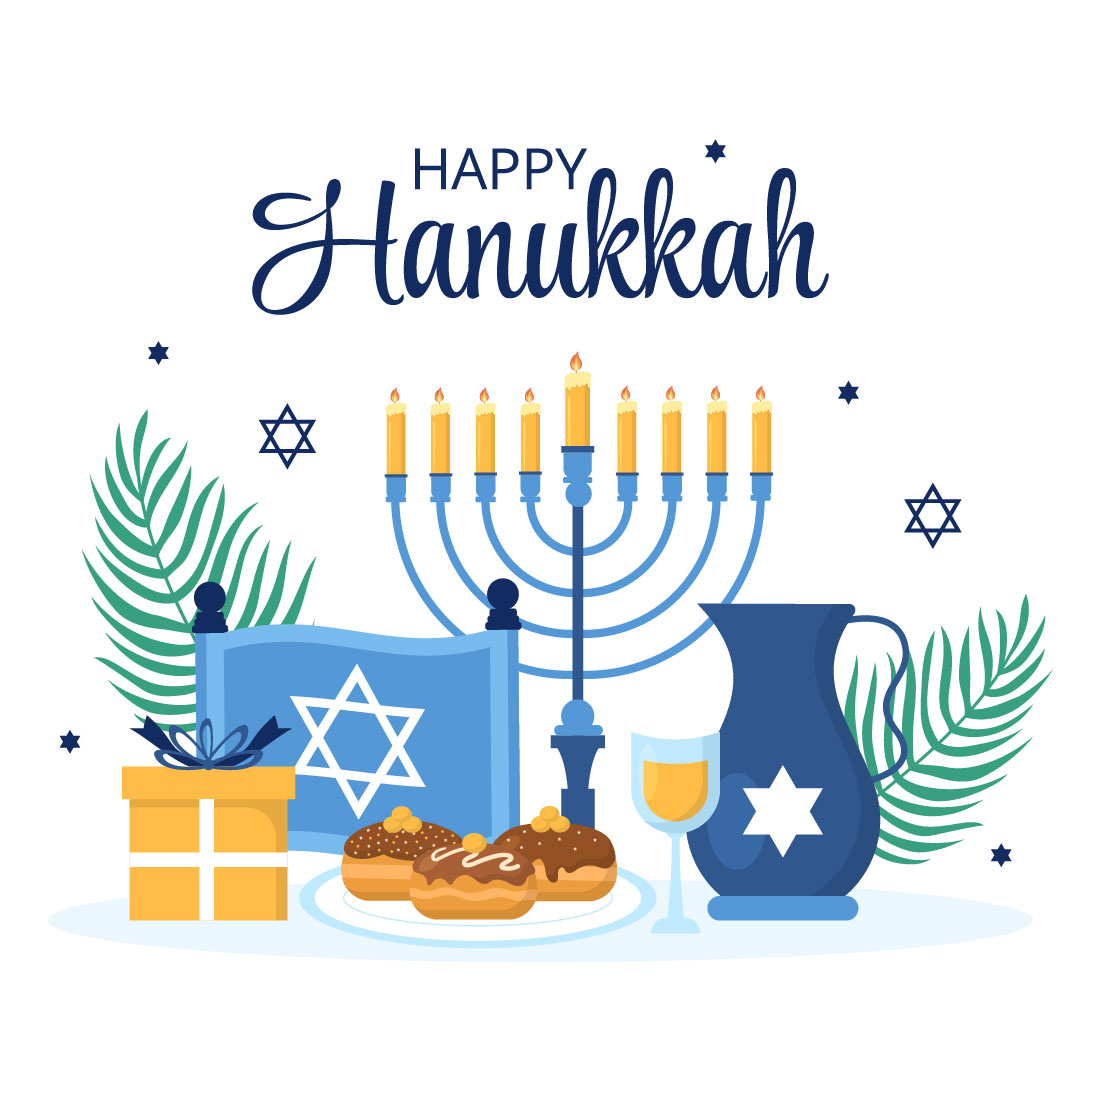 14 Happy Hanukkah Jewish Holiday Illustration preview image.